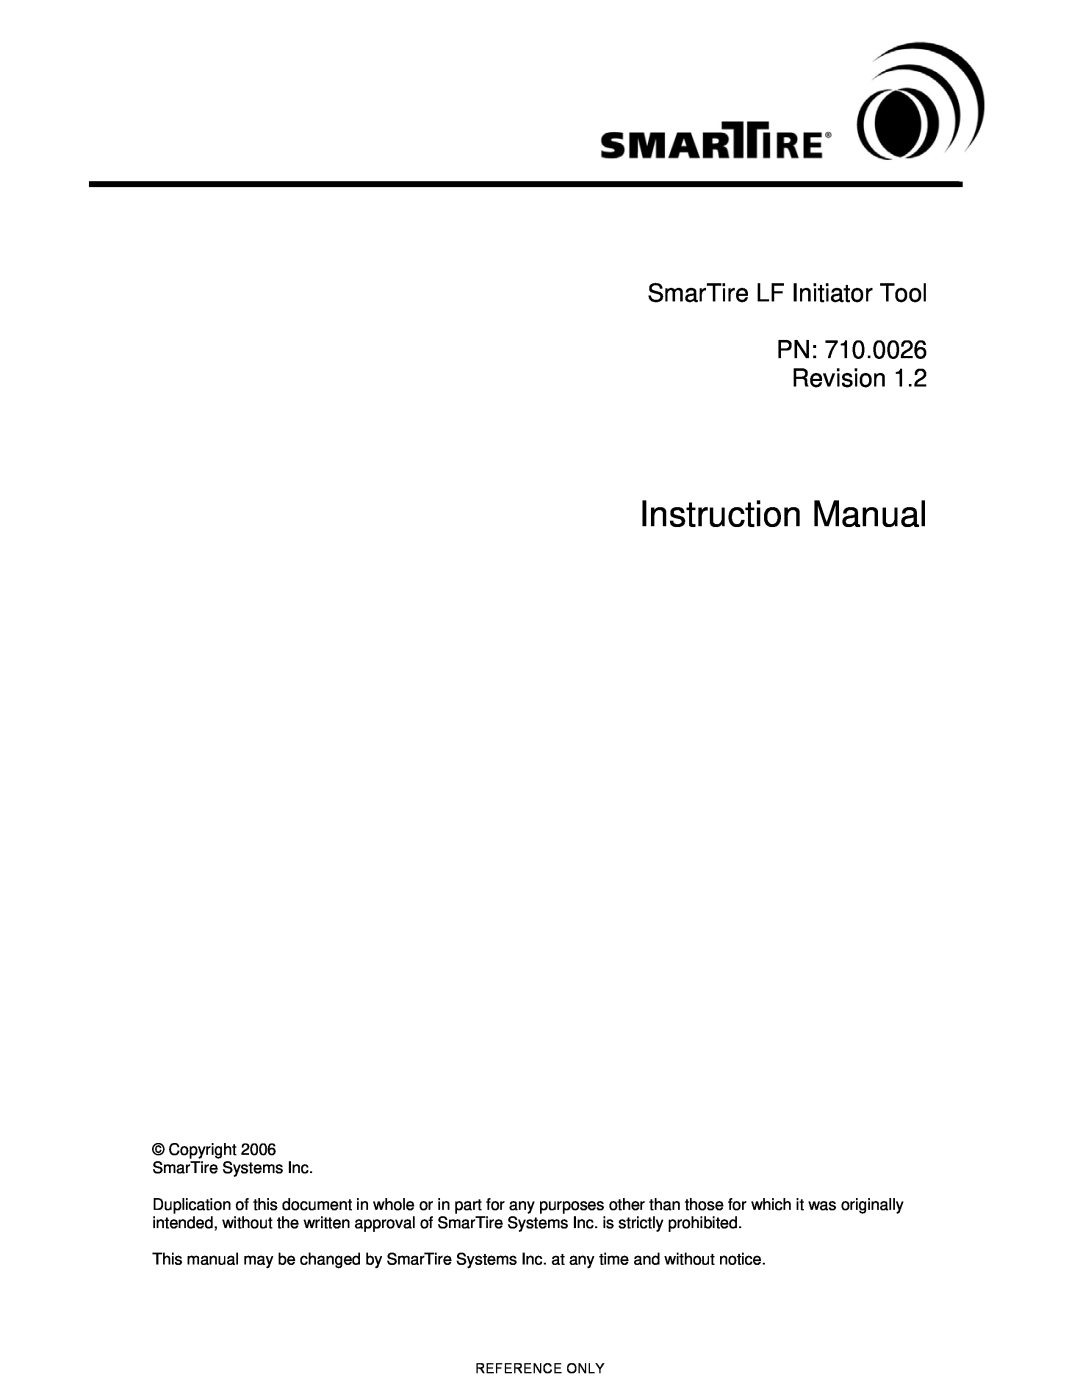 Smart Technologies 710.0026 instruction manual SmarTire LF Initiator Tool PN Revision 